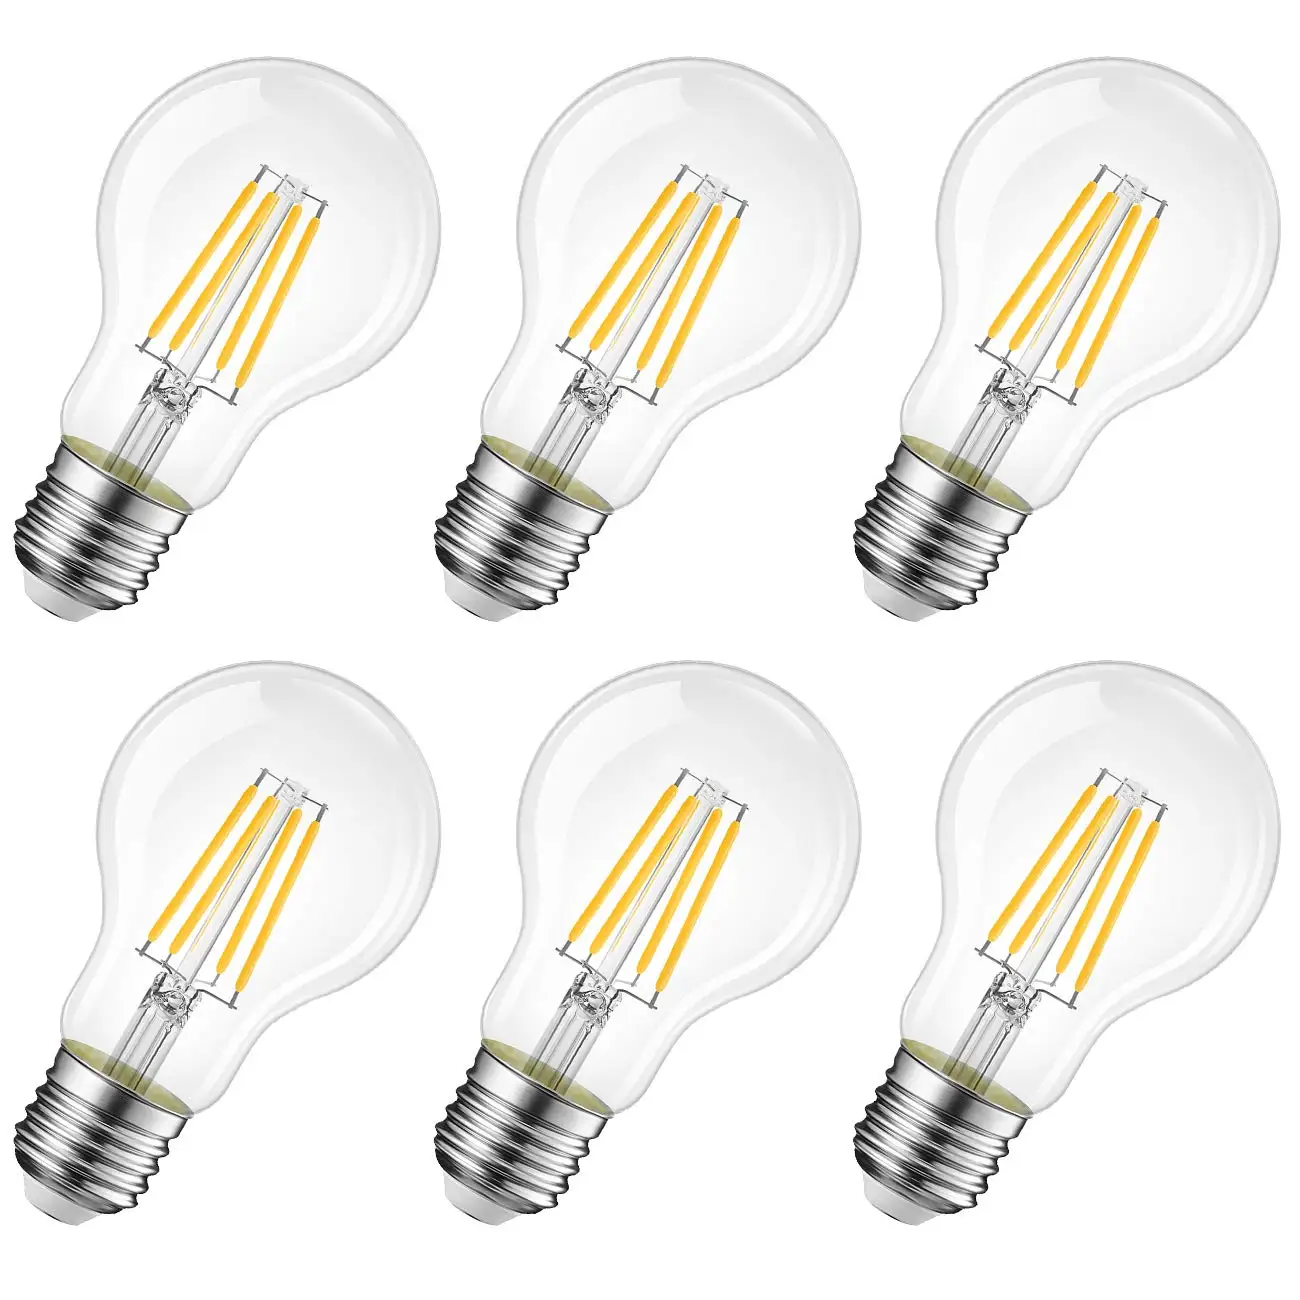 6PCS E27 Retro Edison LED Filament Bulb Lamp A60 4W 6W 8W Warm white 2700K Clear Glass 220V light Energy saving bulb